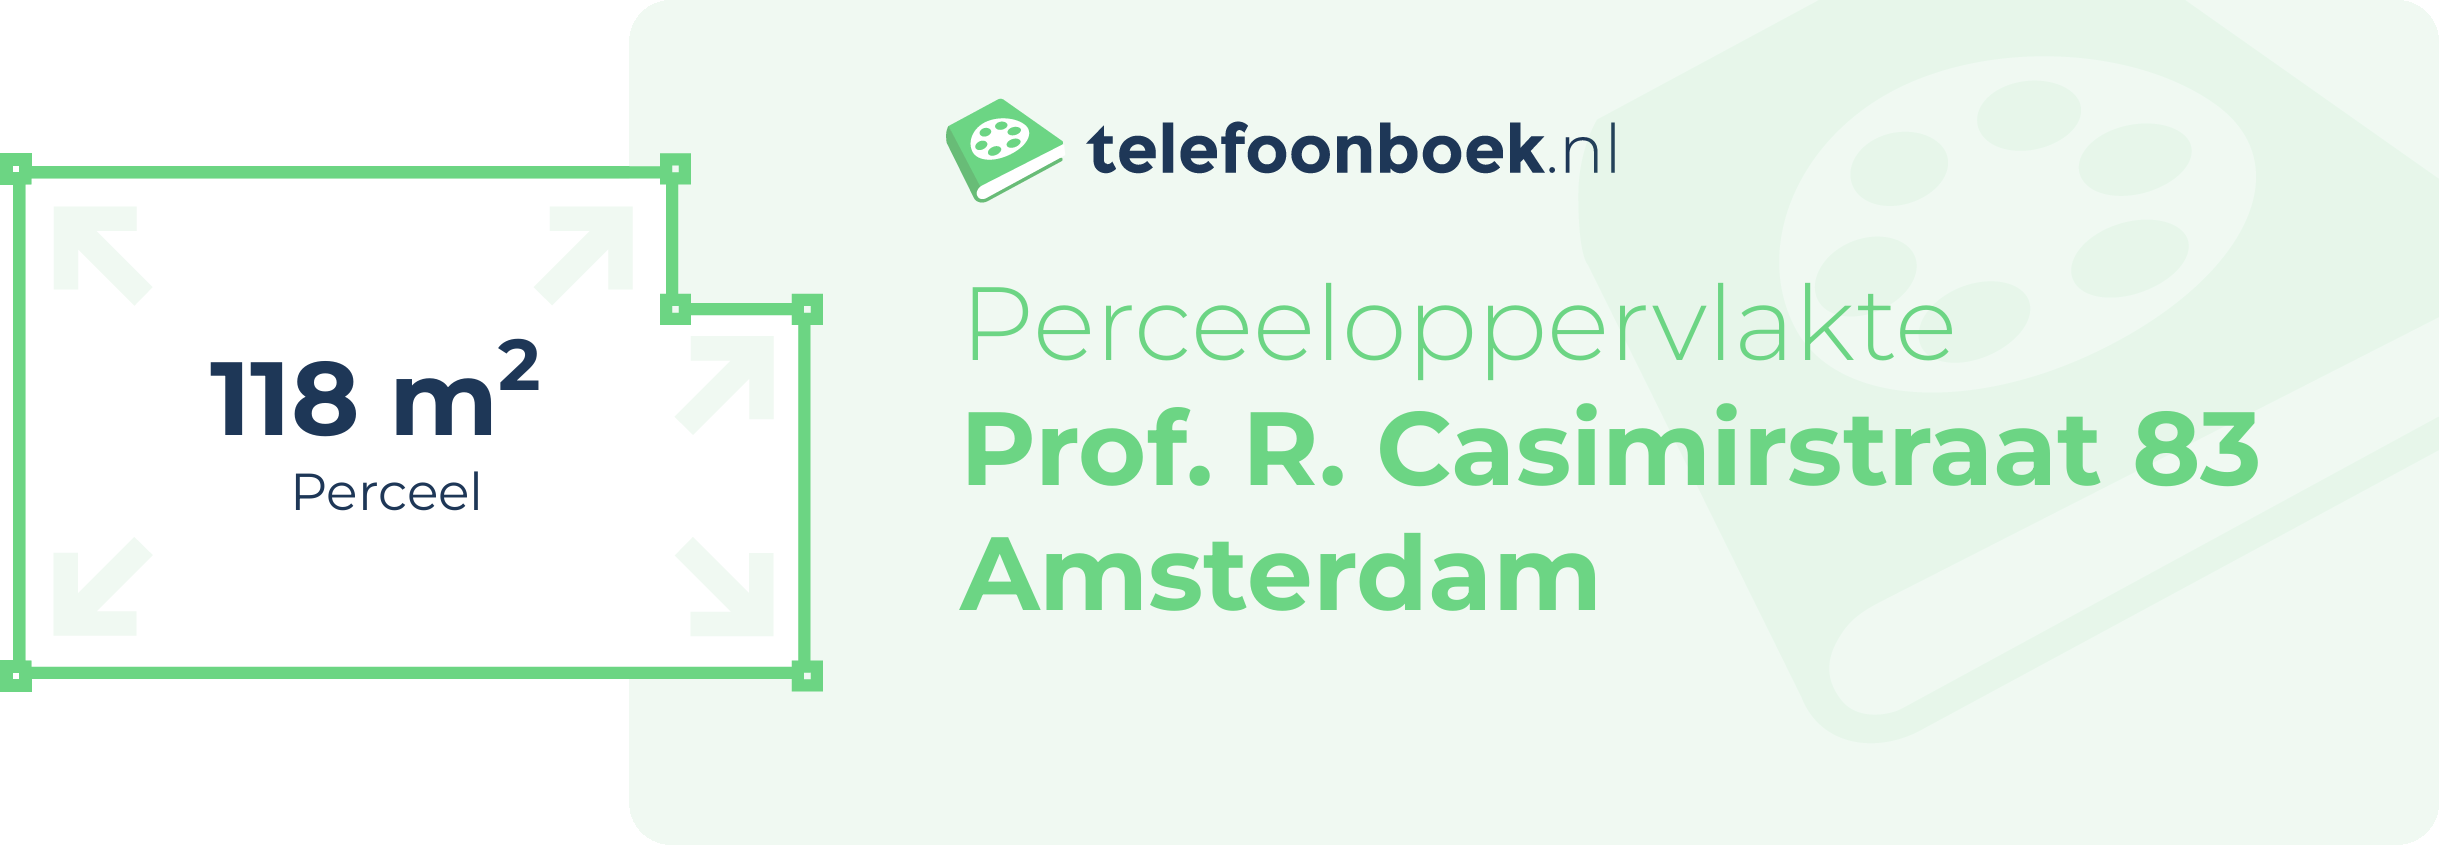 Perceeloppervlakte Prof. R. Casimirstraat 83 Amsterdam